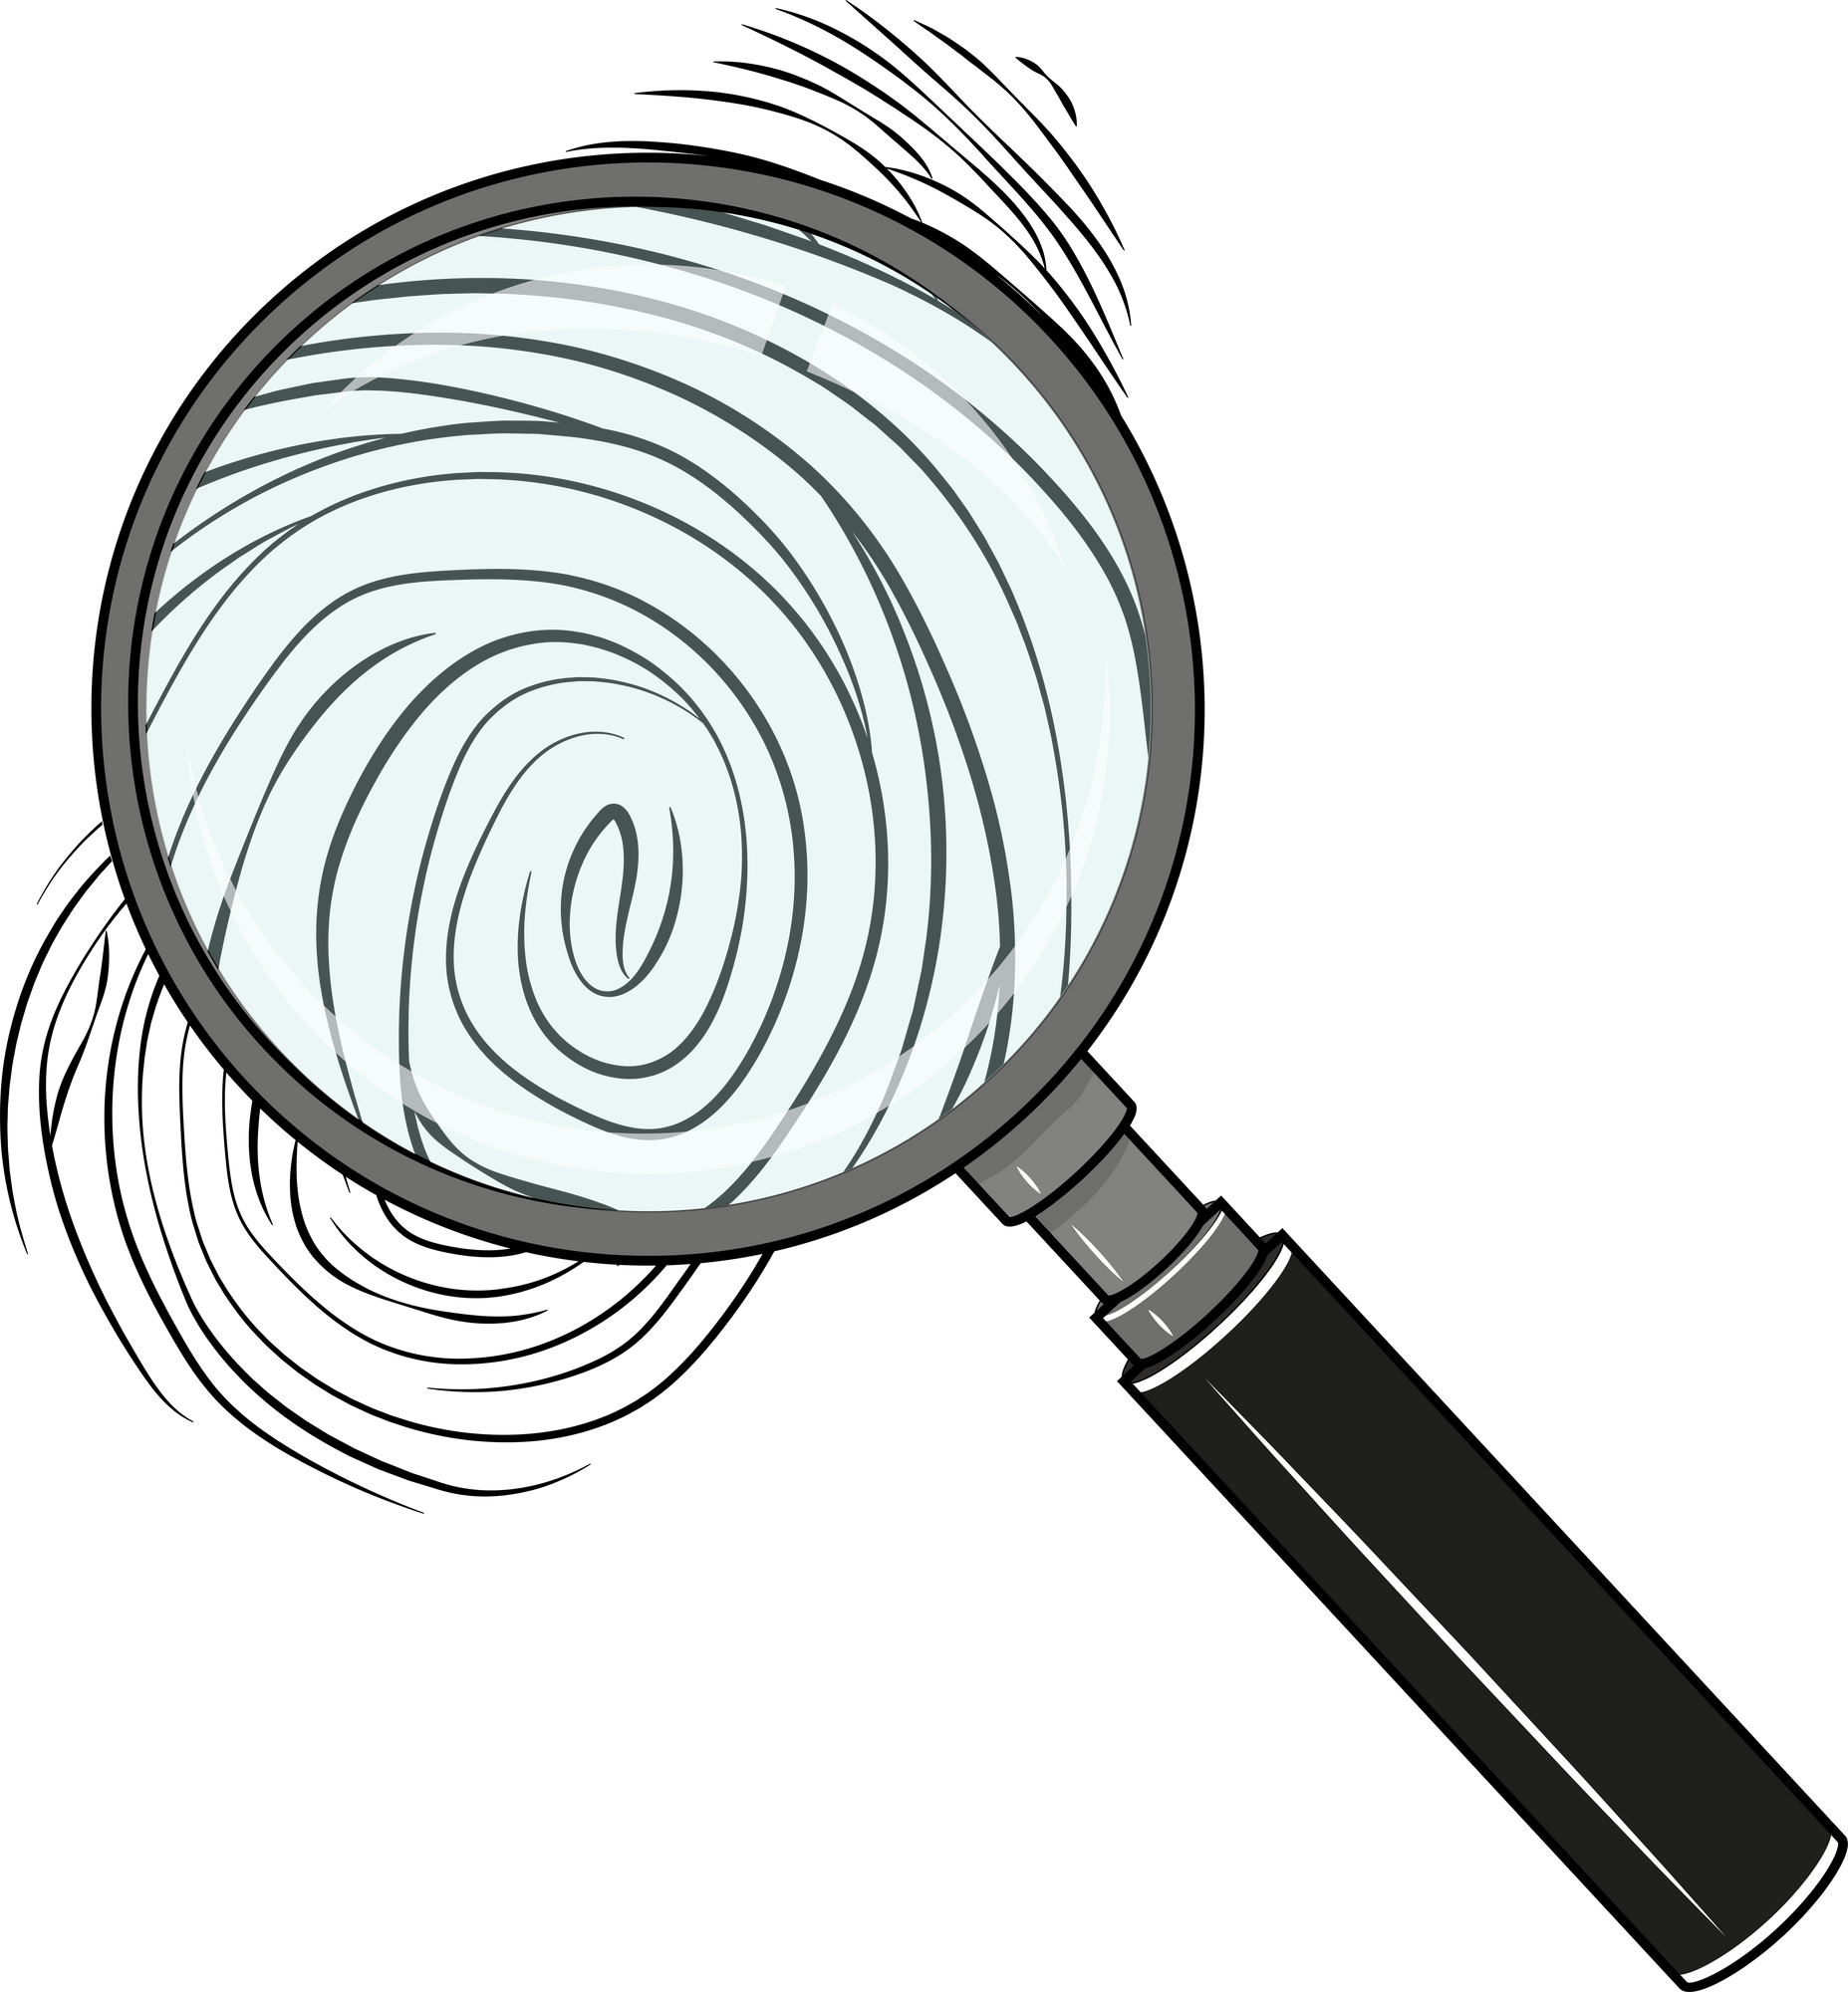 Crime investigation icon with fingerprint. Icon